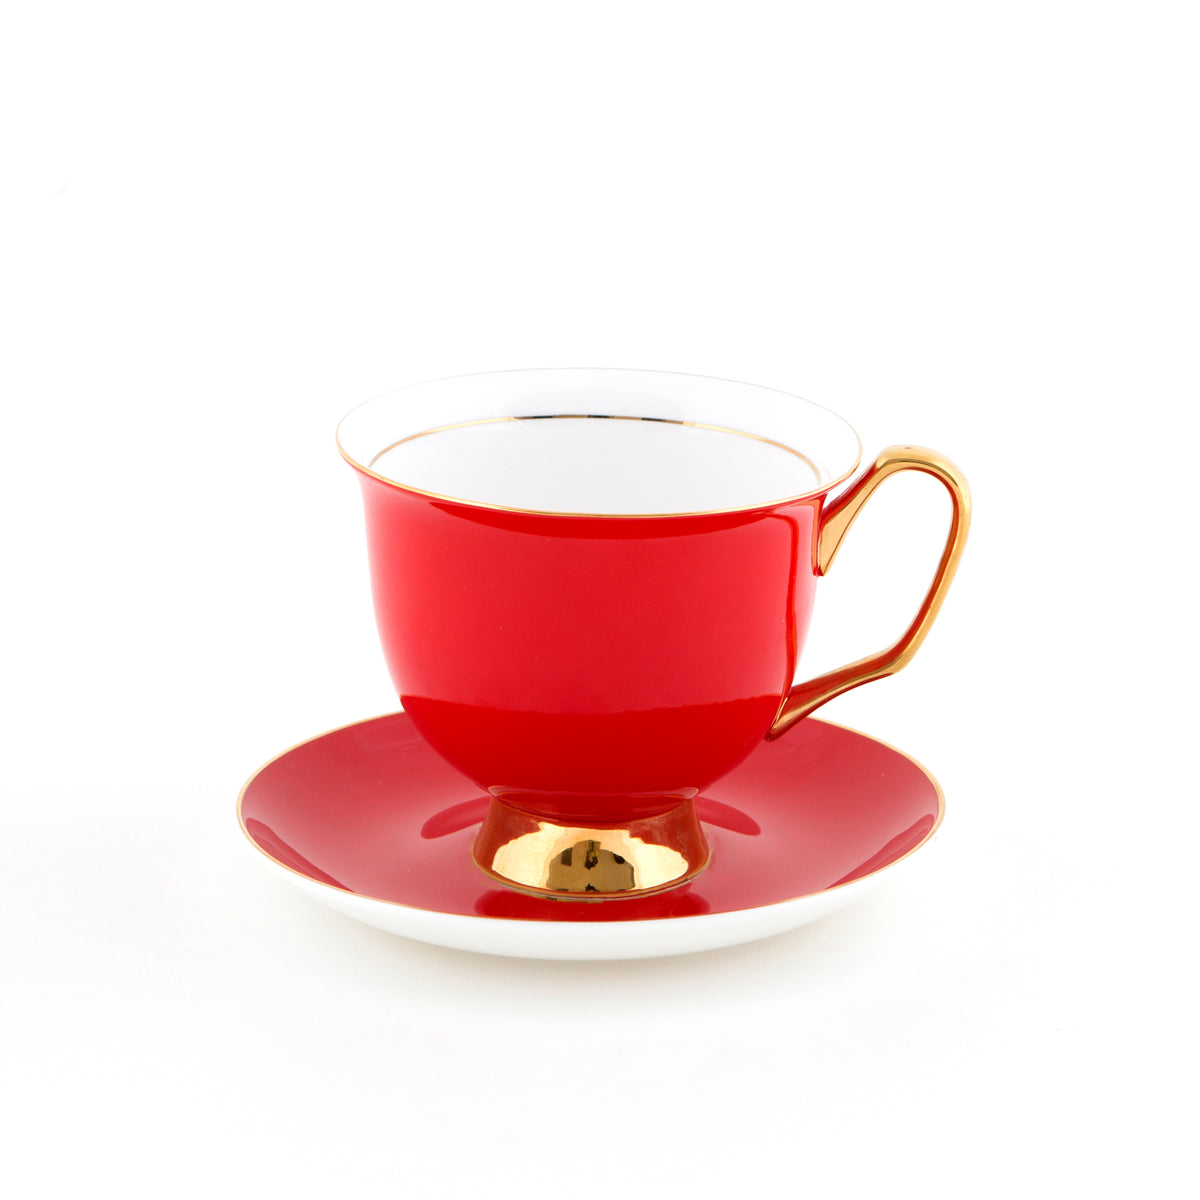 XL Red Teacup and Saucer